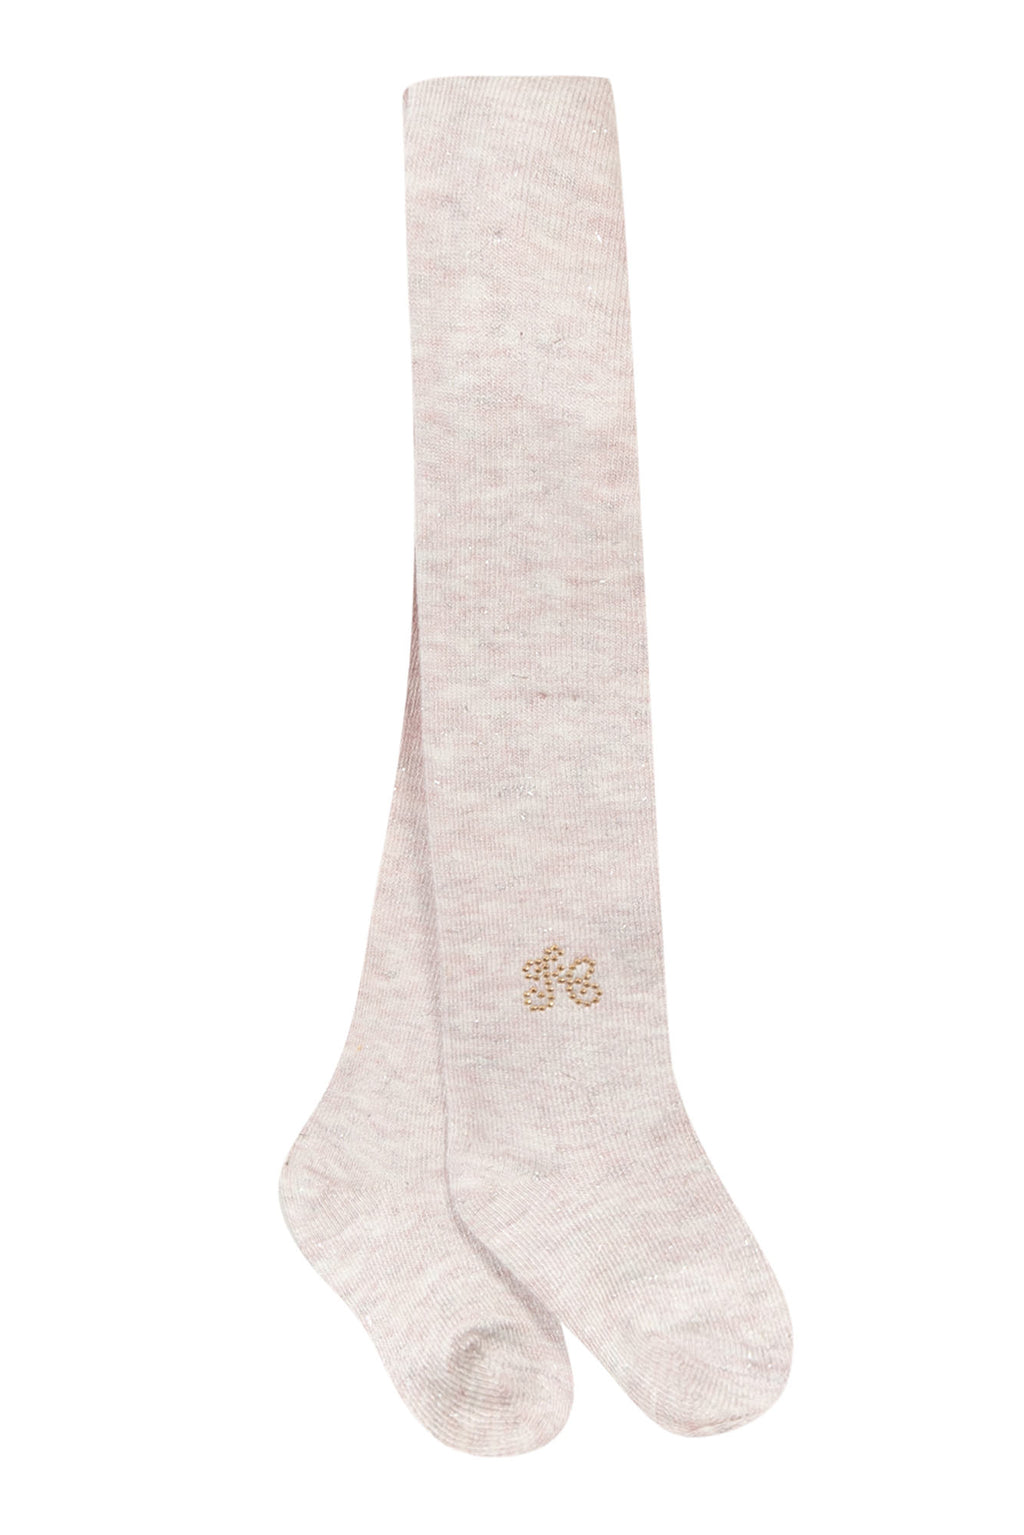 Sticky - Pale pink Knitwear lurex